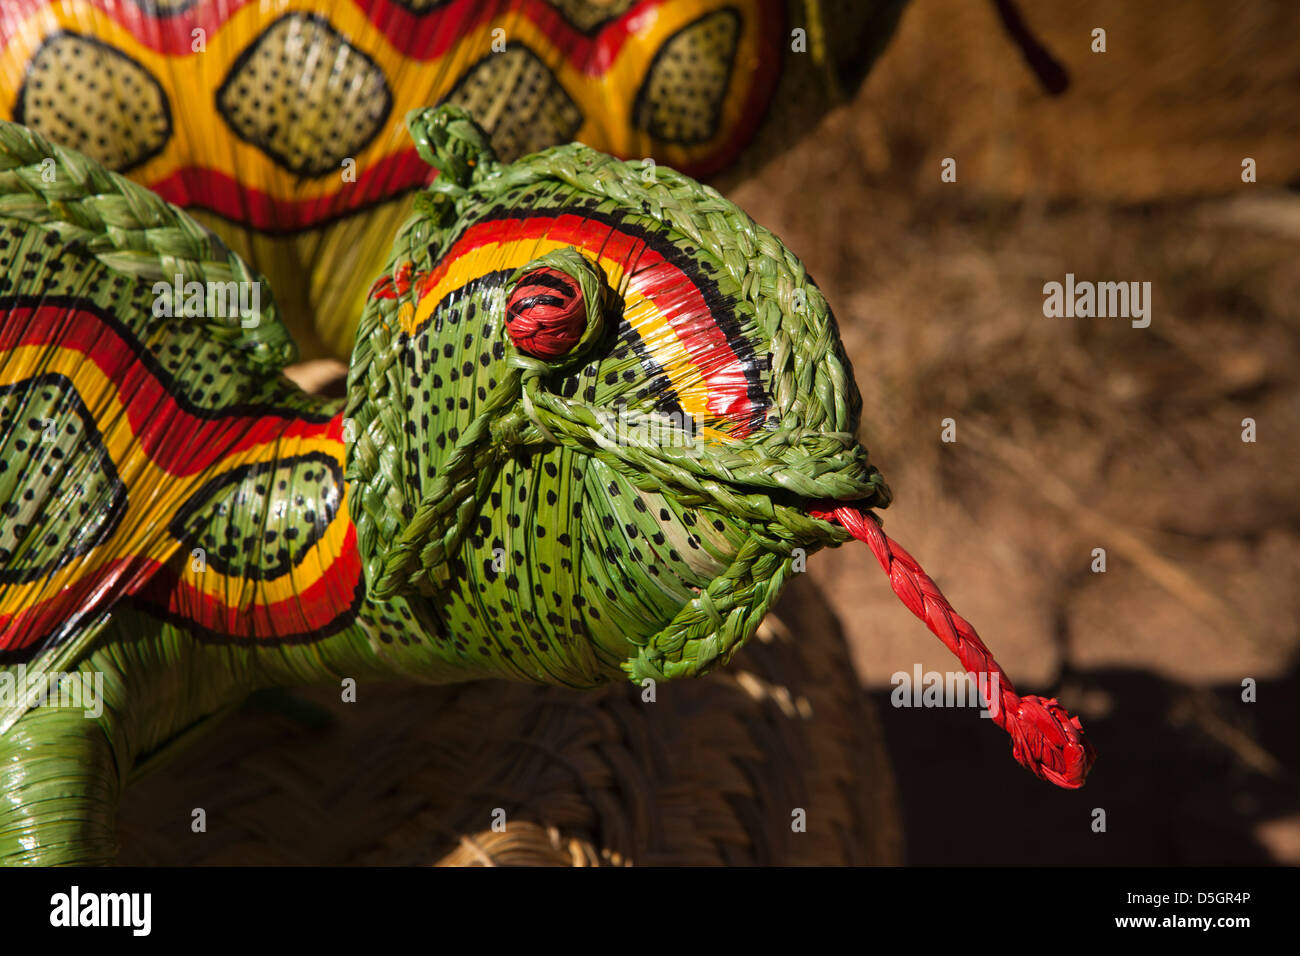 Madagascar, Ambatolampy, roadside stall selling raffia animals, head of chameleon Stock Photo